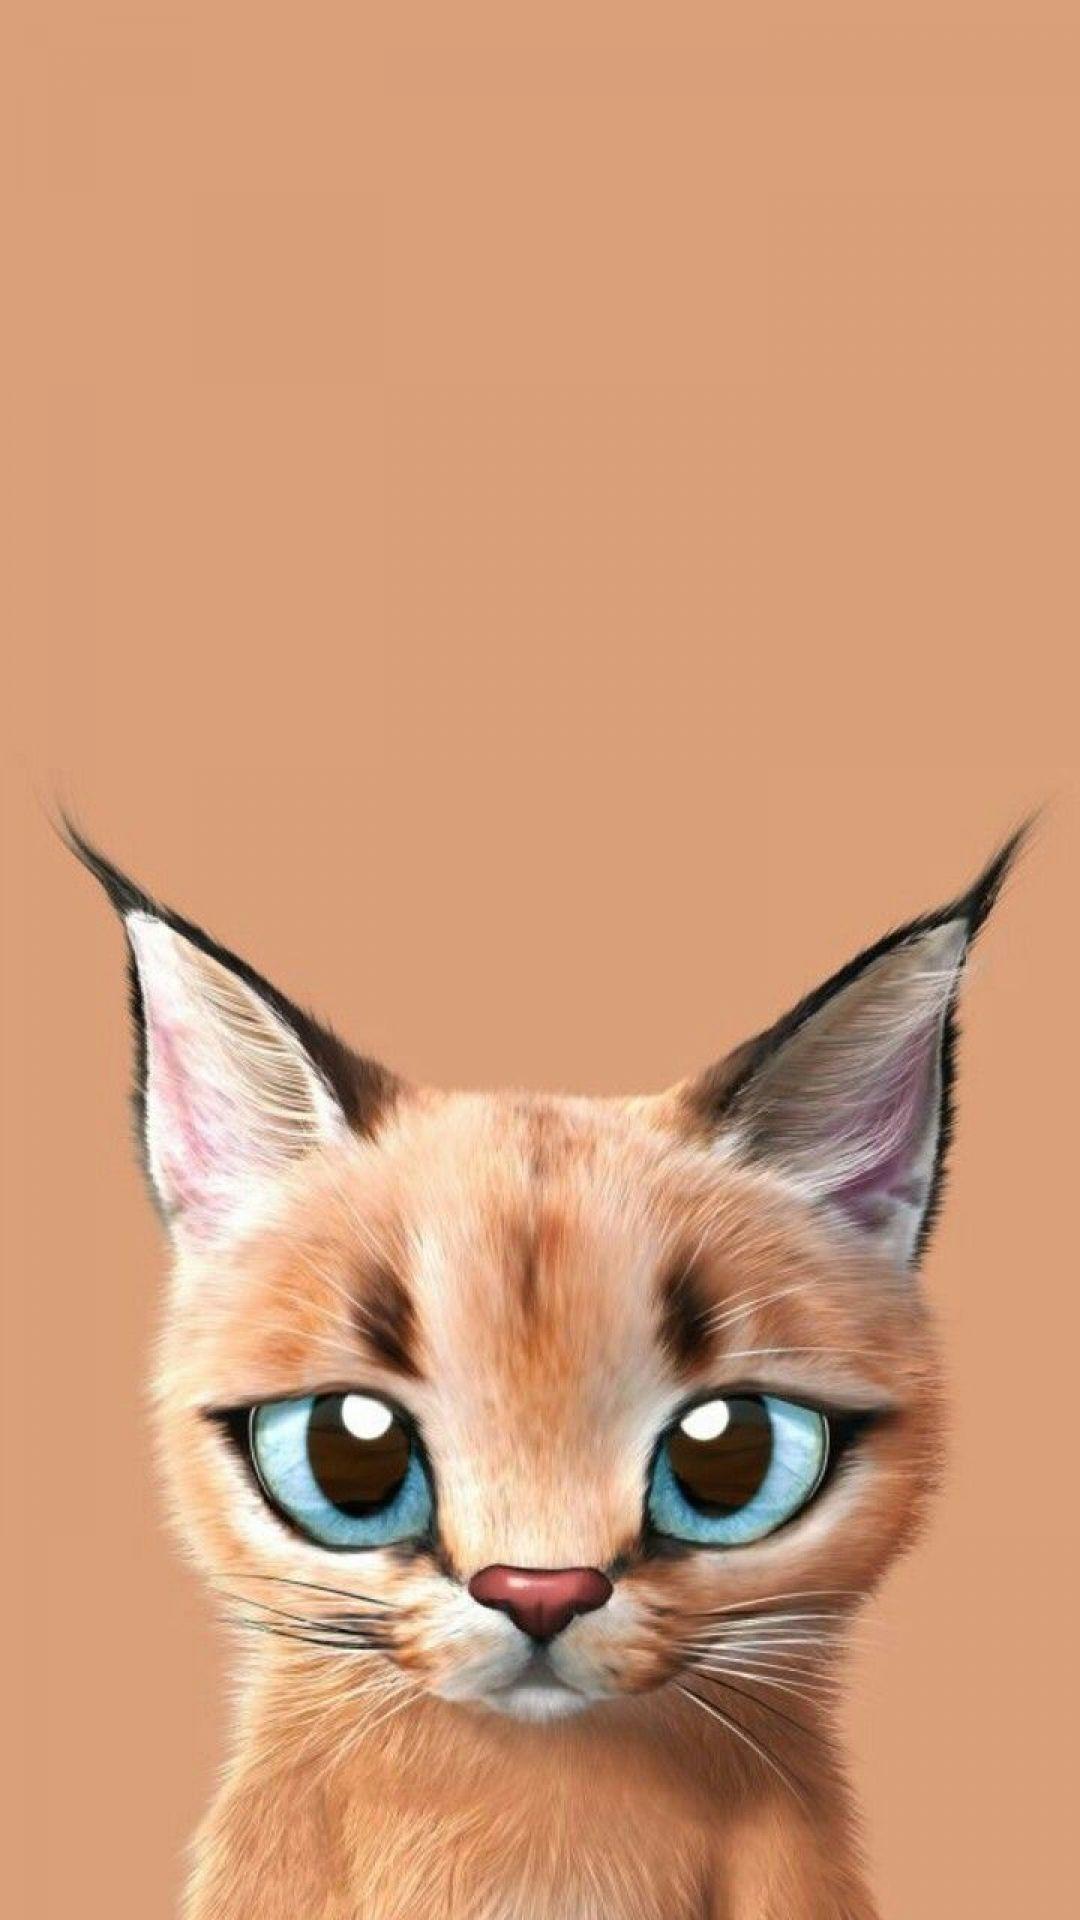 Kawaii Anime Cat HD Wallpaper (Desktop Background / Android / iPhone) (1080p, 4k) (1080x1920) (2020)